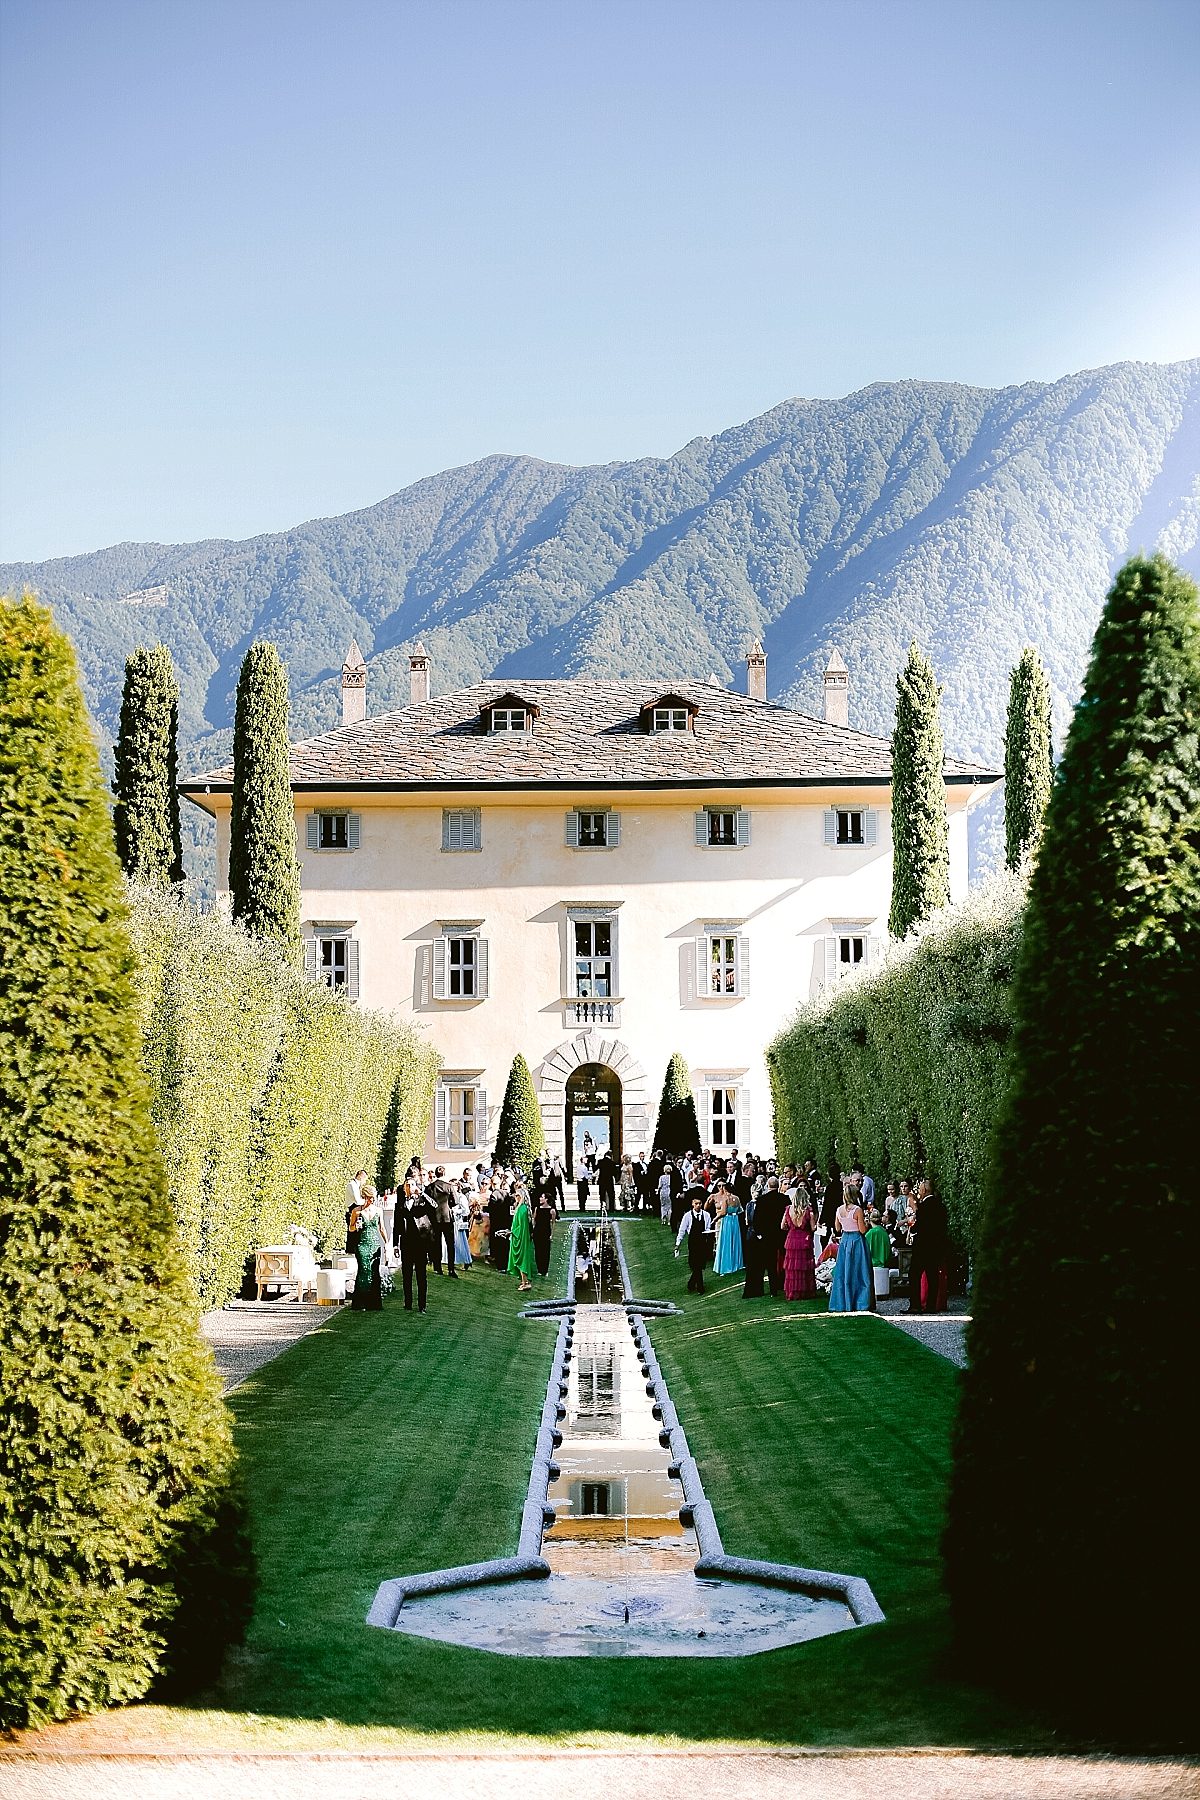 Villa Balbiano Lake como
Luxury wedding 
Photographer lake como 
Cocktail setting 